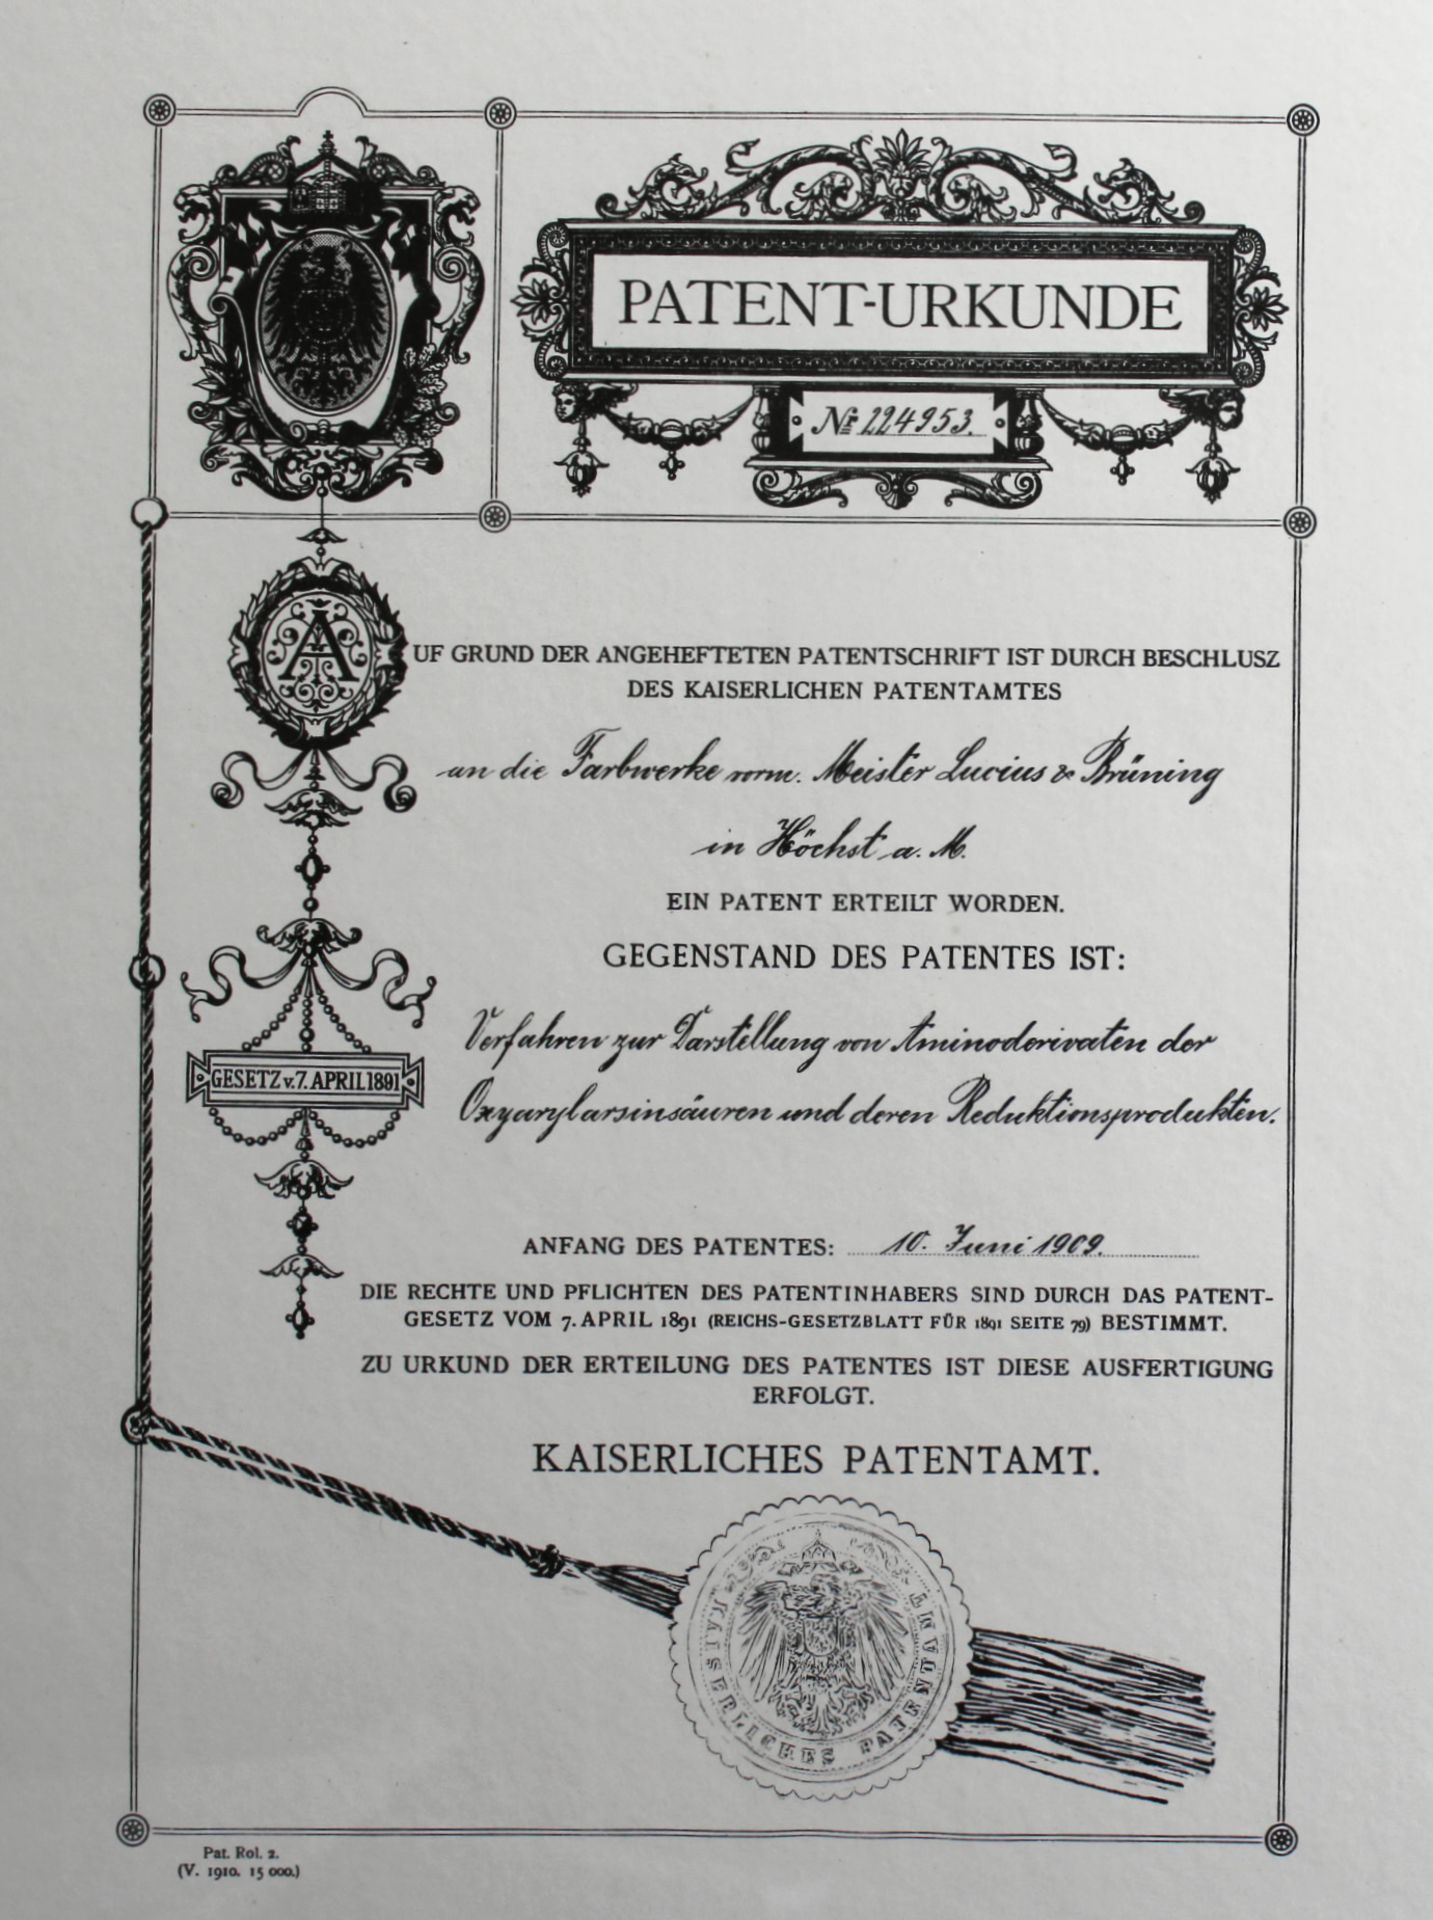 Kopie Patent-Urkunde d. Kaiserl. Patentamtes, Nr. 224953, Farbwerke in Hoechst ab 10.Juni 1909 - Image 2 of 2